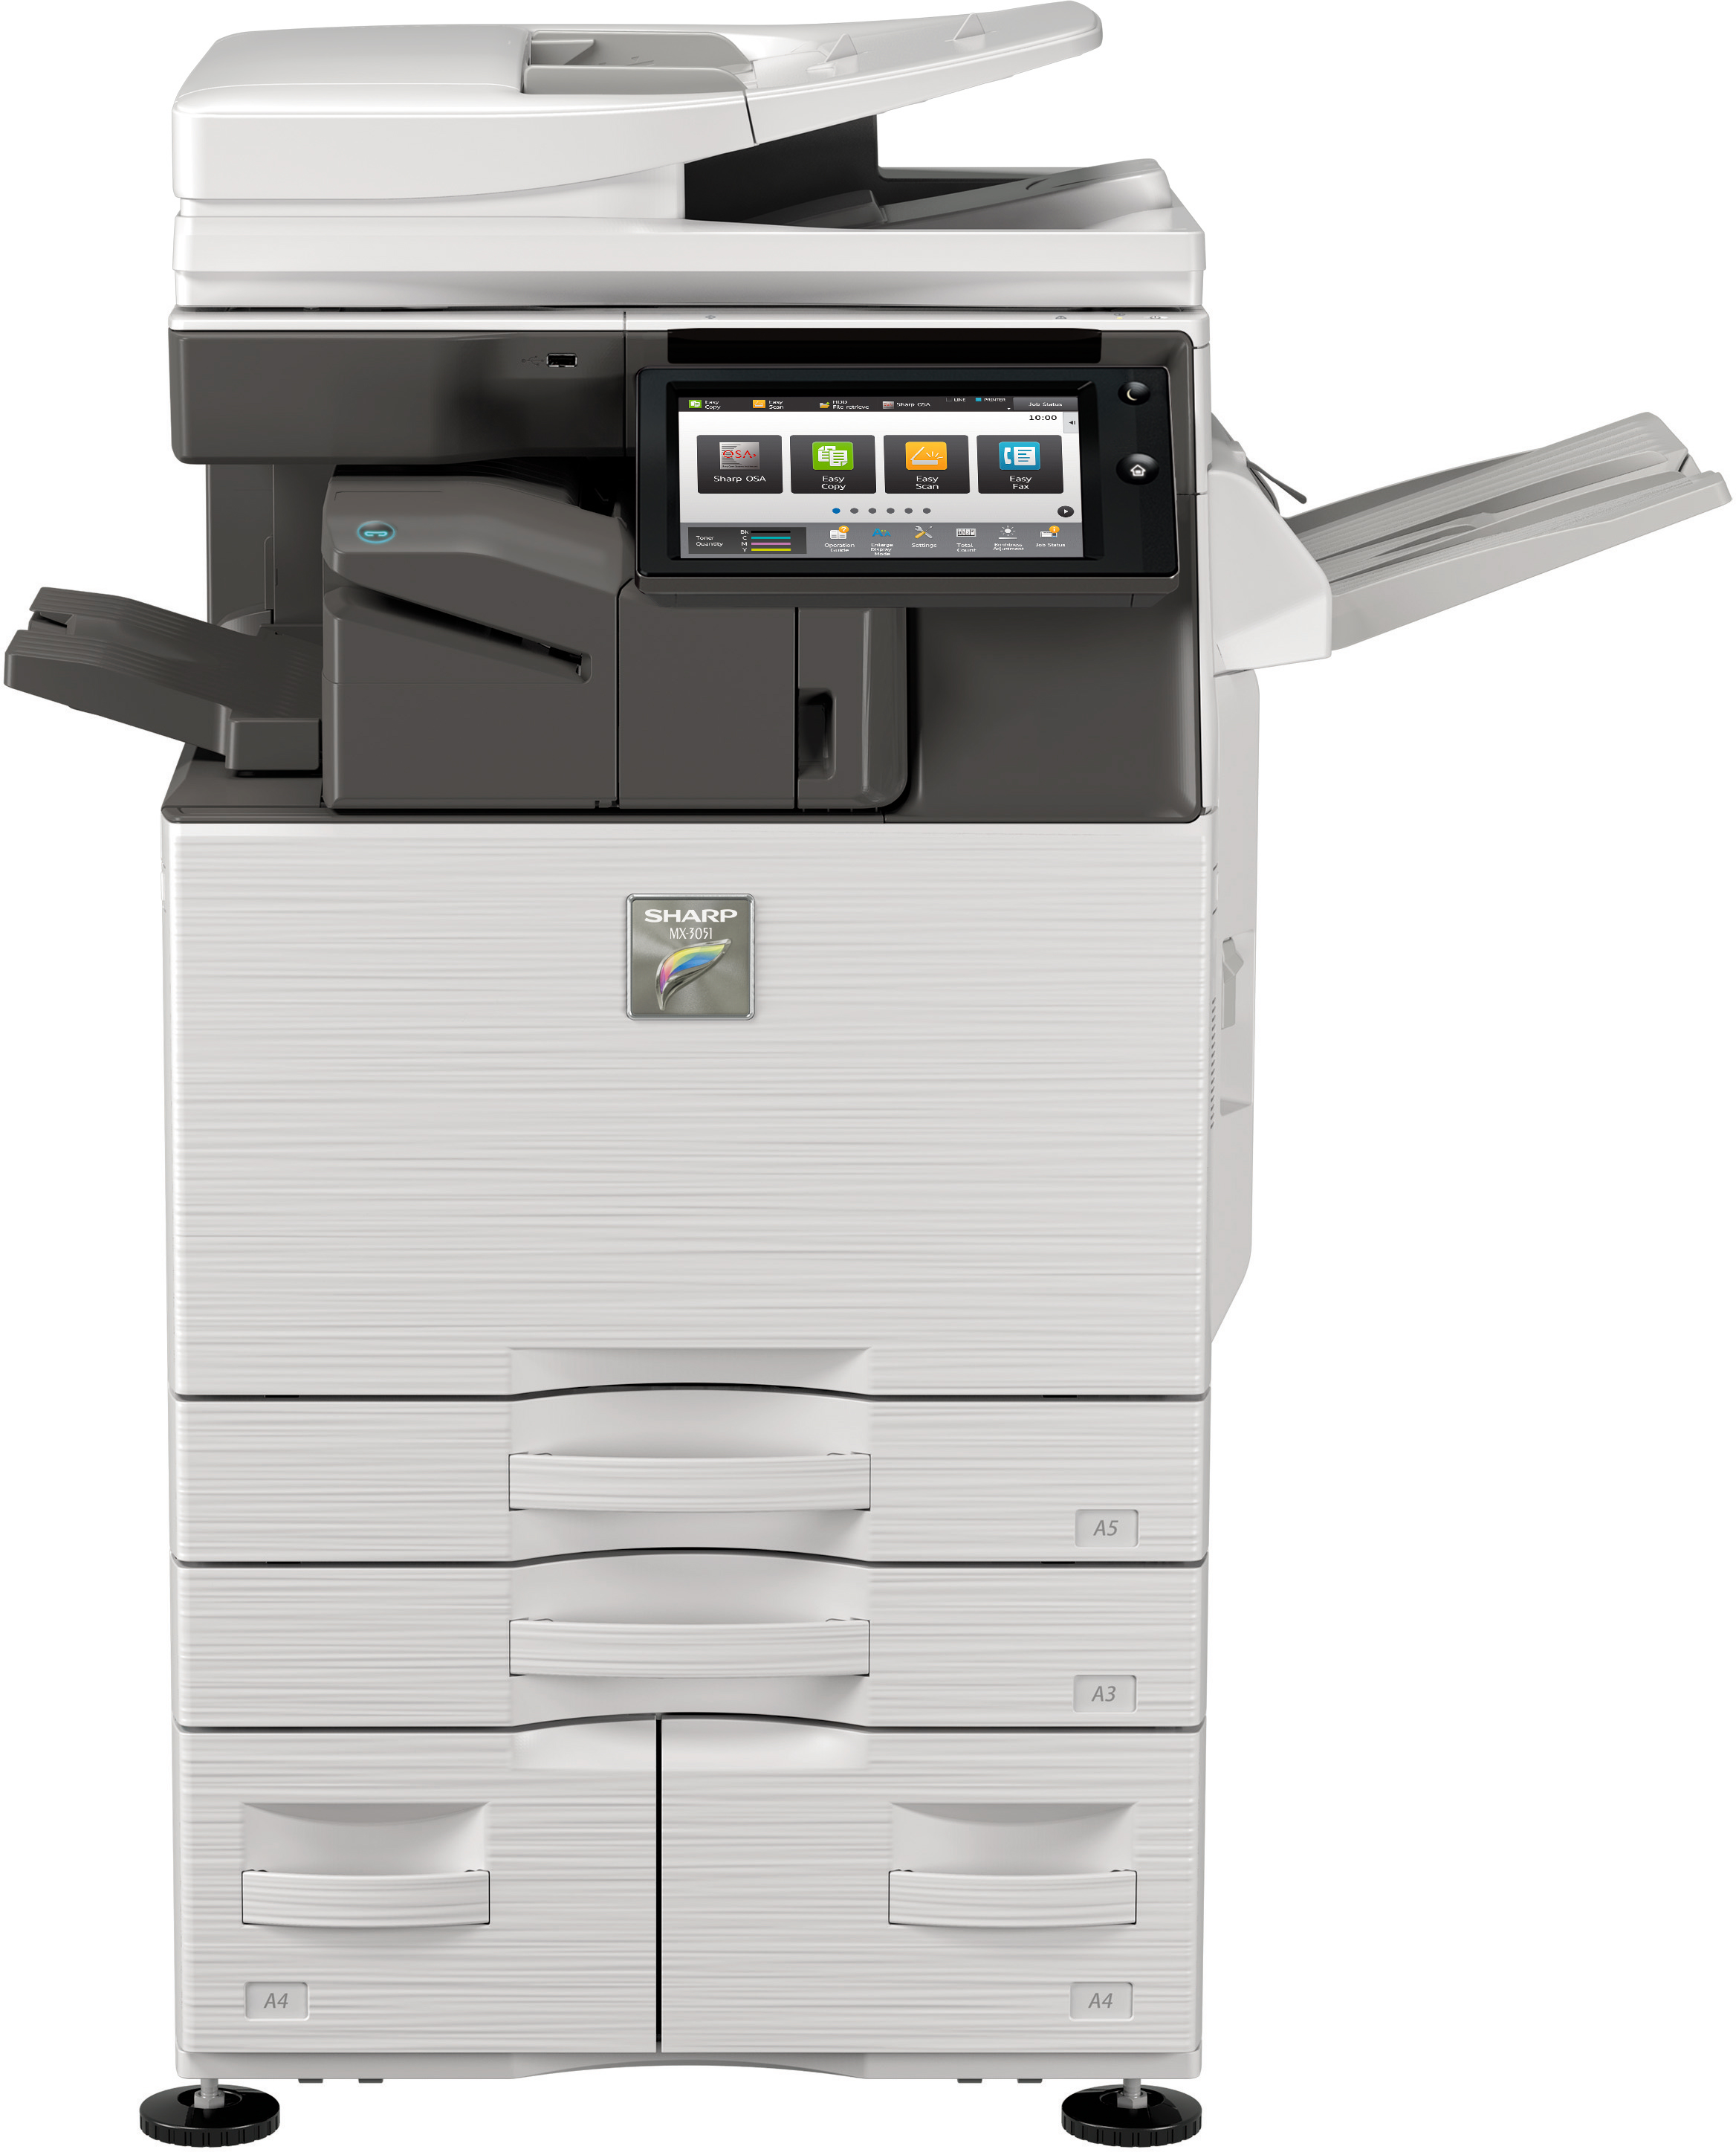 Sharp MX-3051 Multifunction Printer